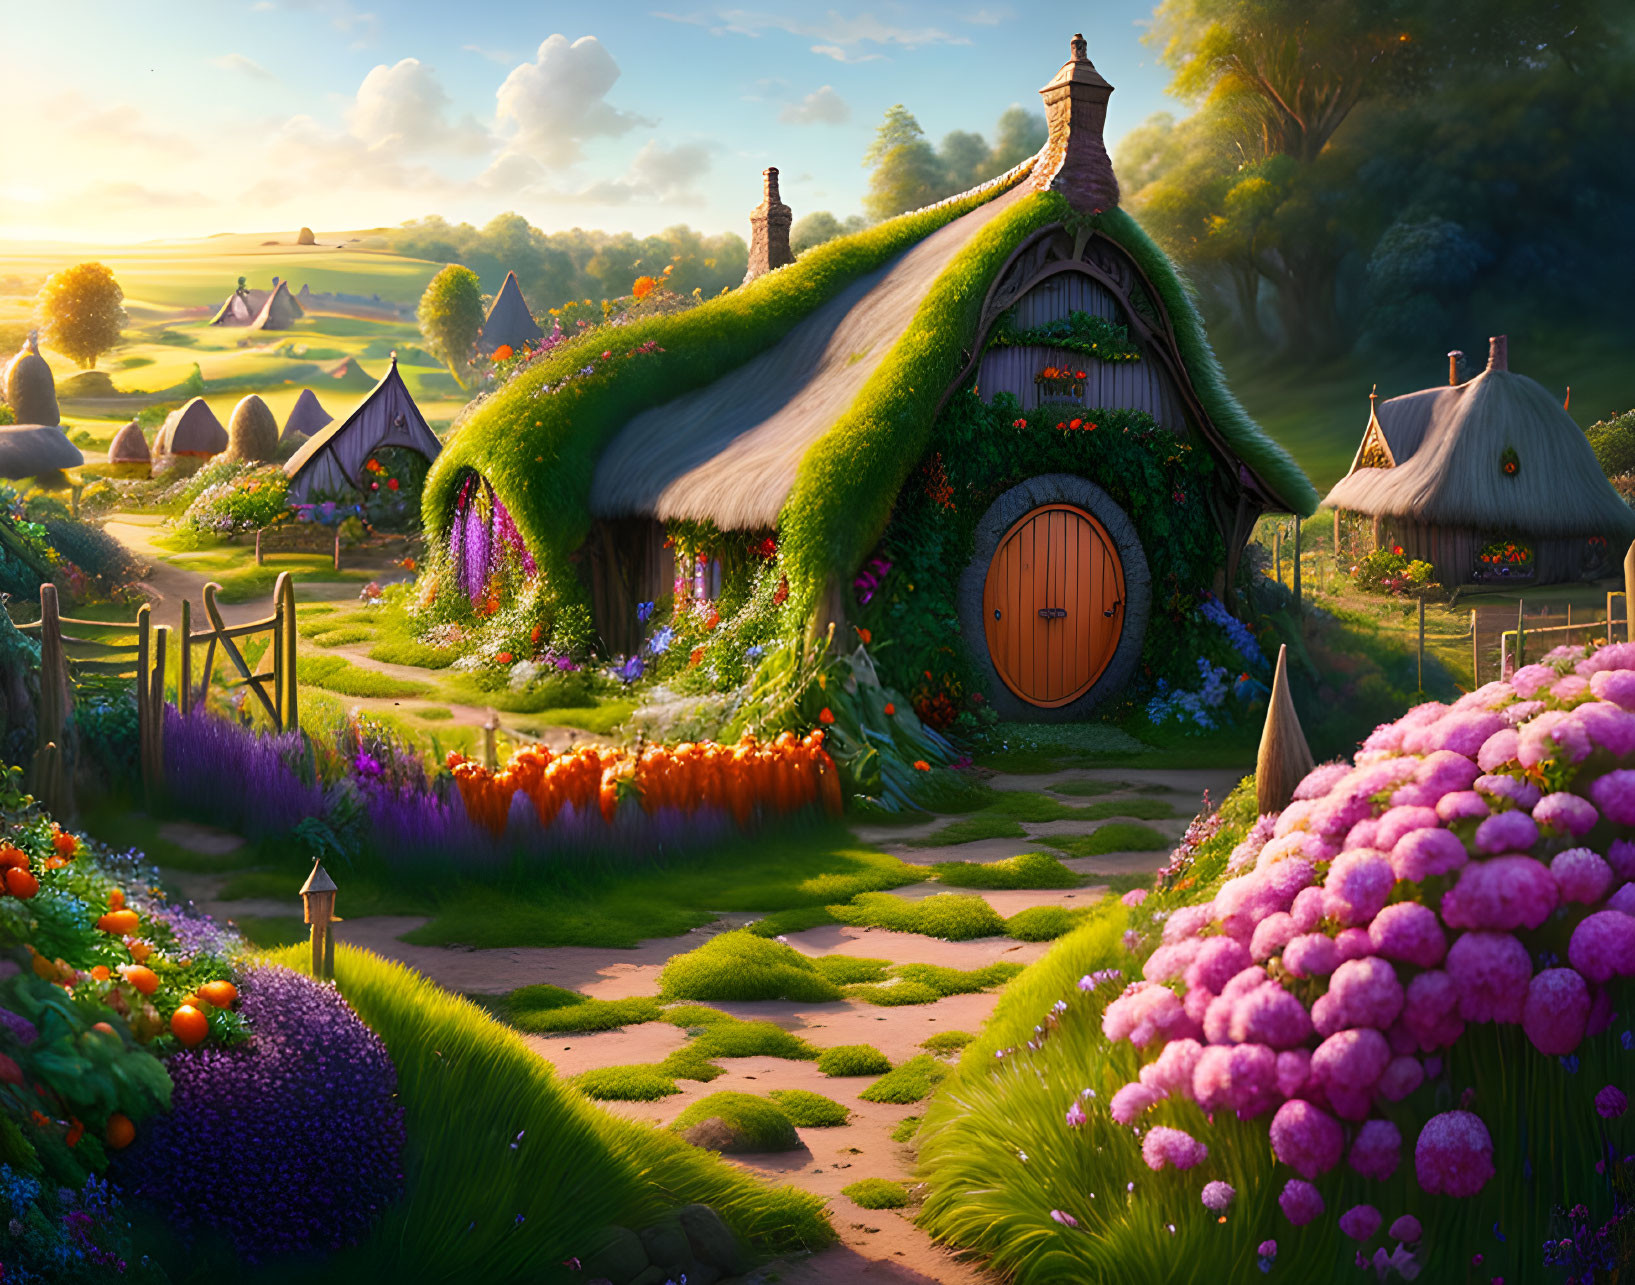 Hobbit's house at Shire (2)